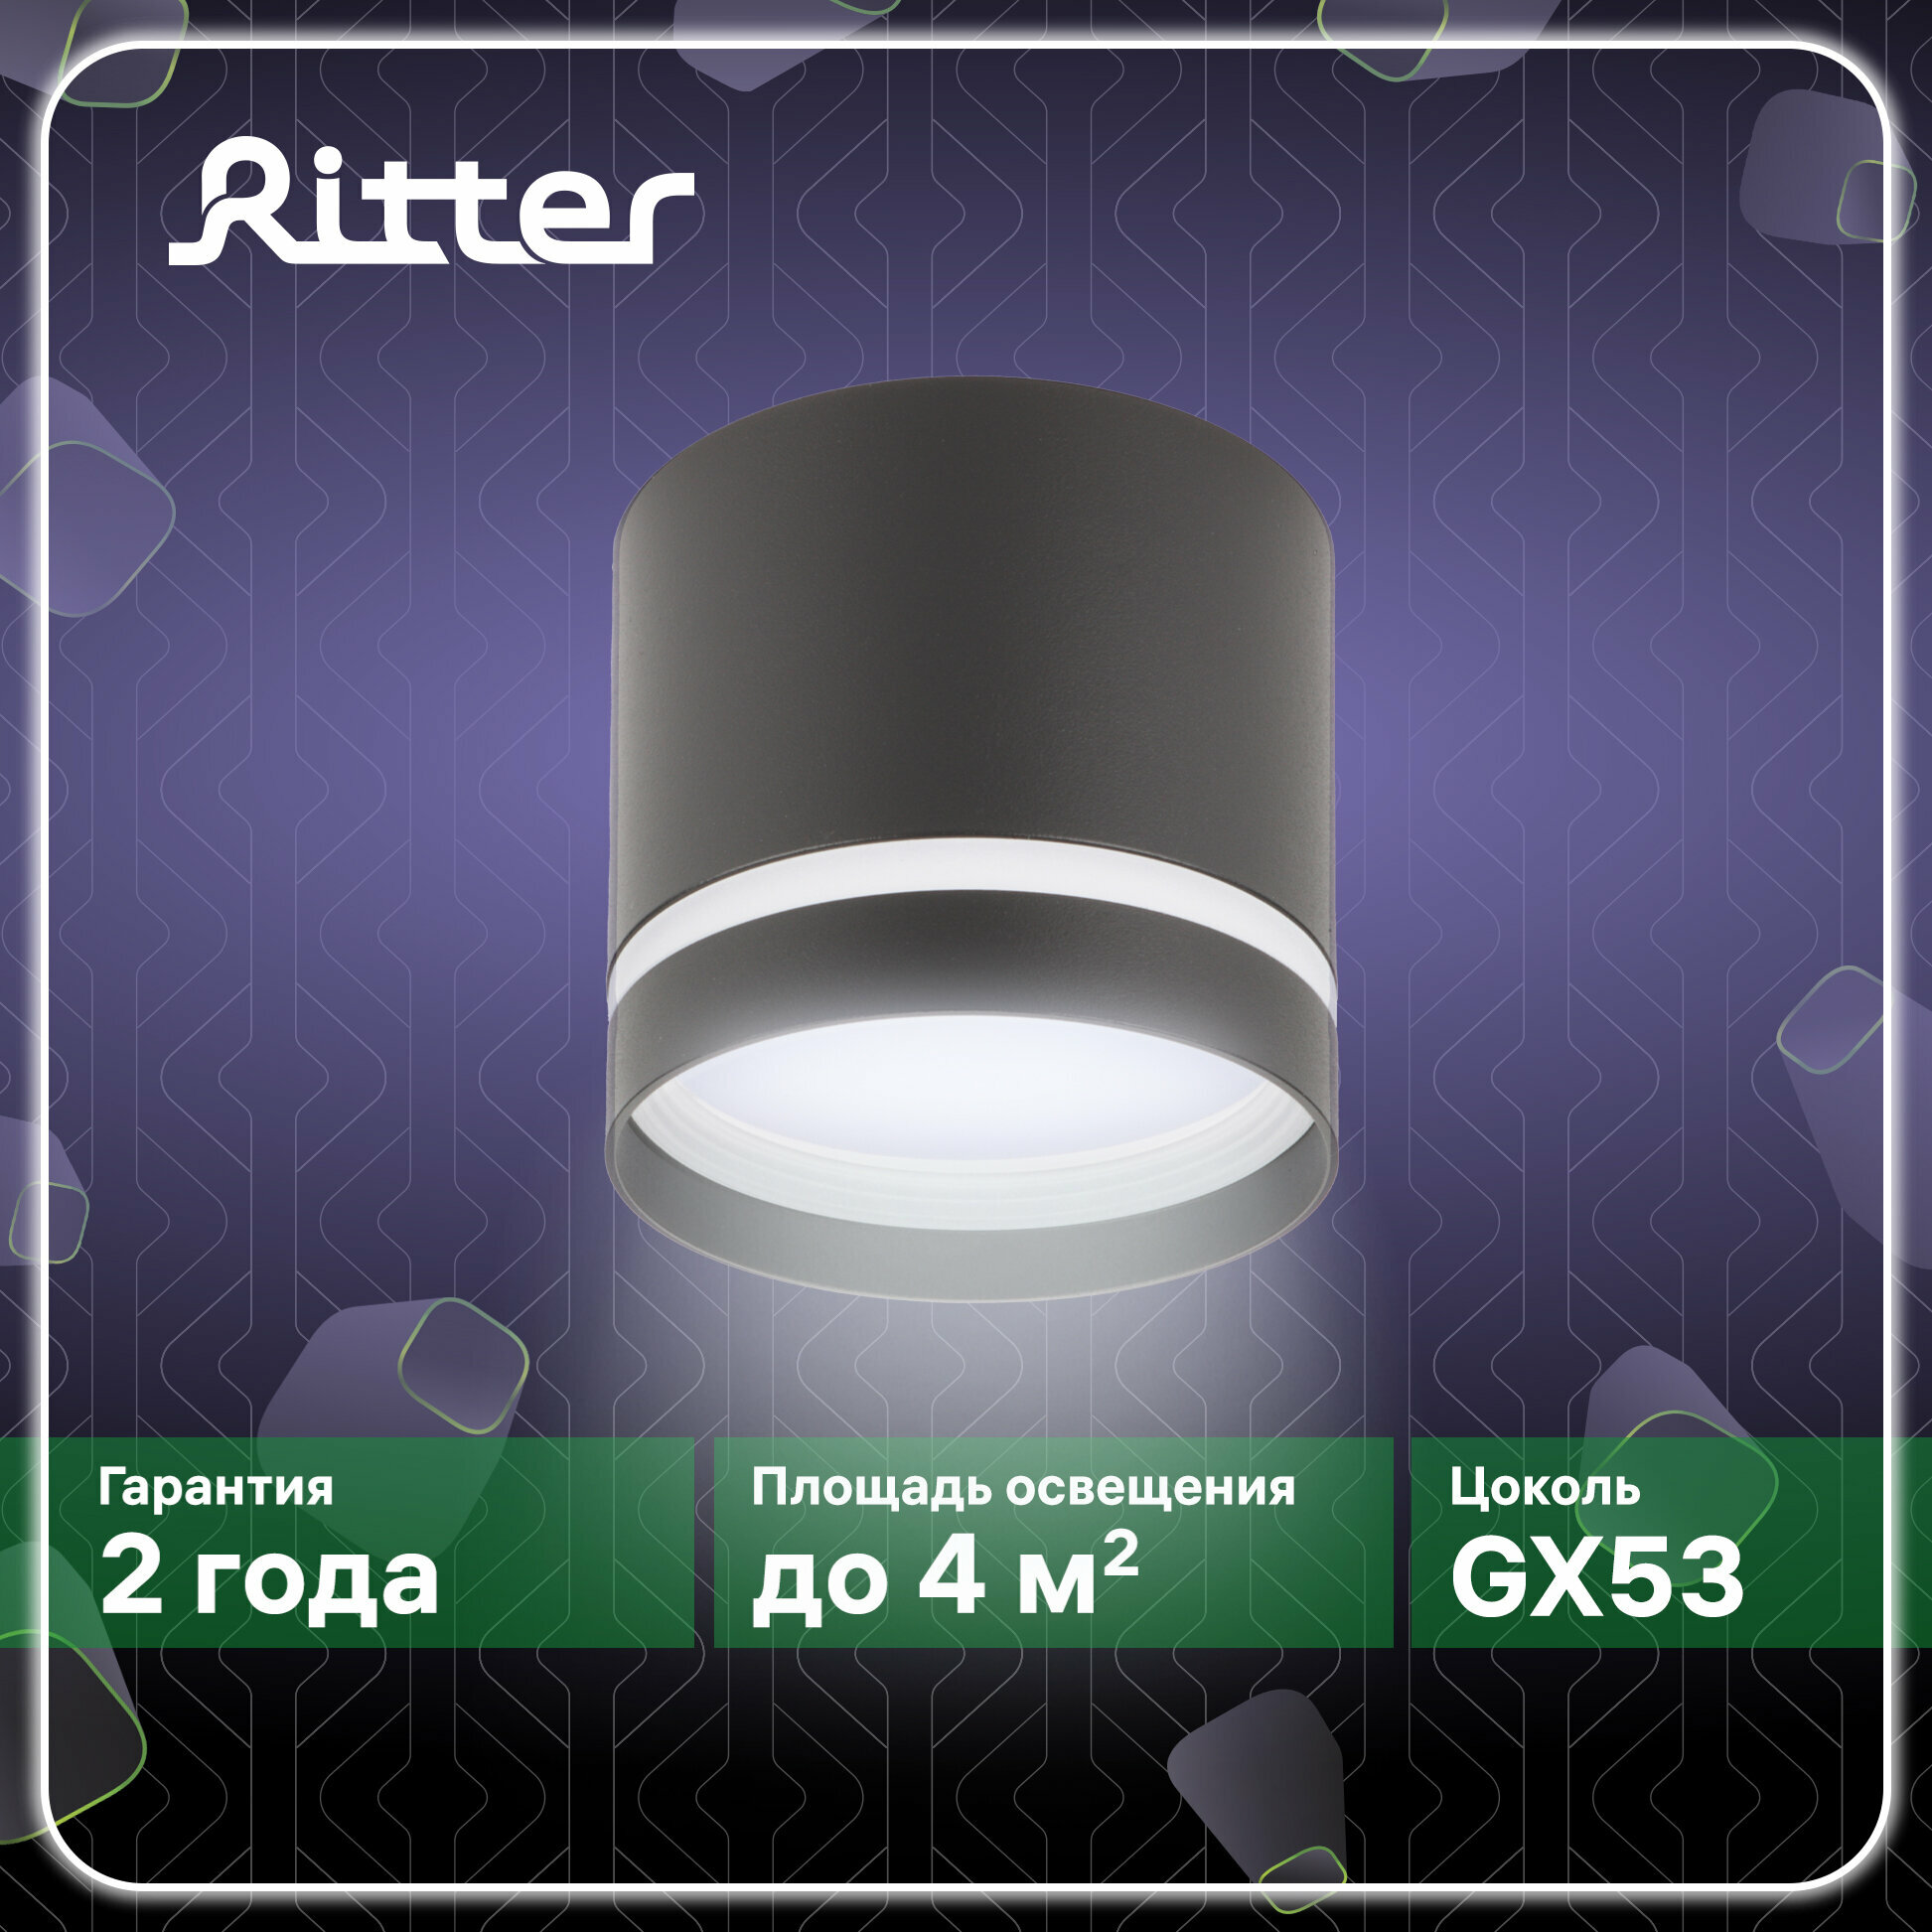 Светильник накладной Arton цилиндр 85х80мм GX53 алюминий черный настенно-потолочный светильник для гостиной кухни спальни Ritter 59943 2